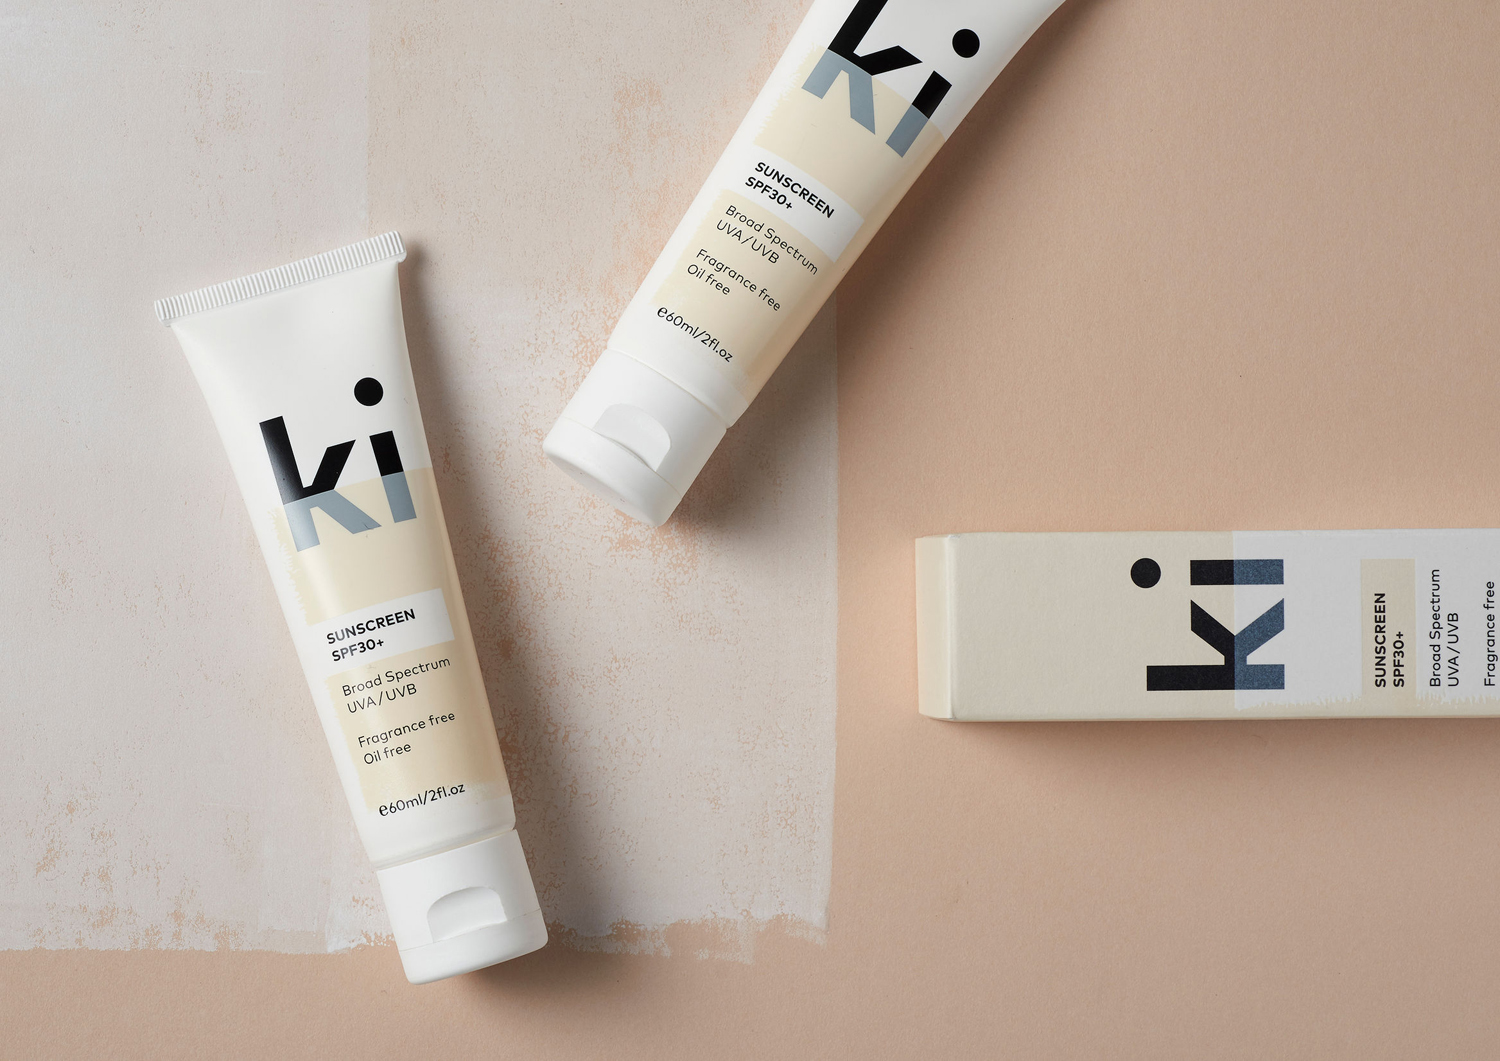 New Zealand Design & Packaging – Ki Sunscreen by Akin